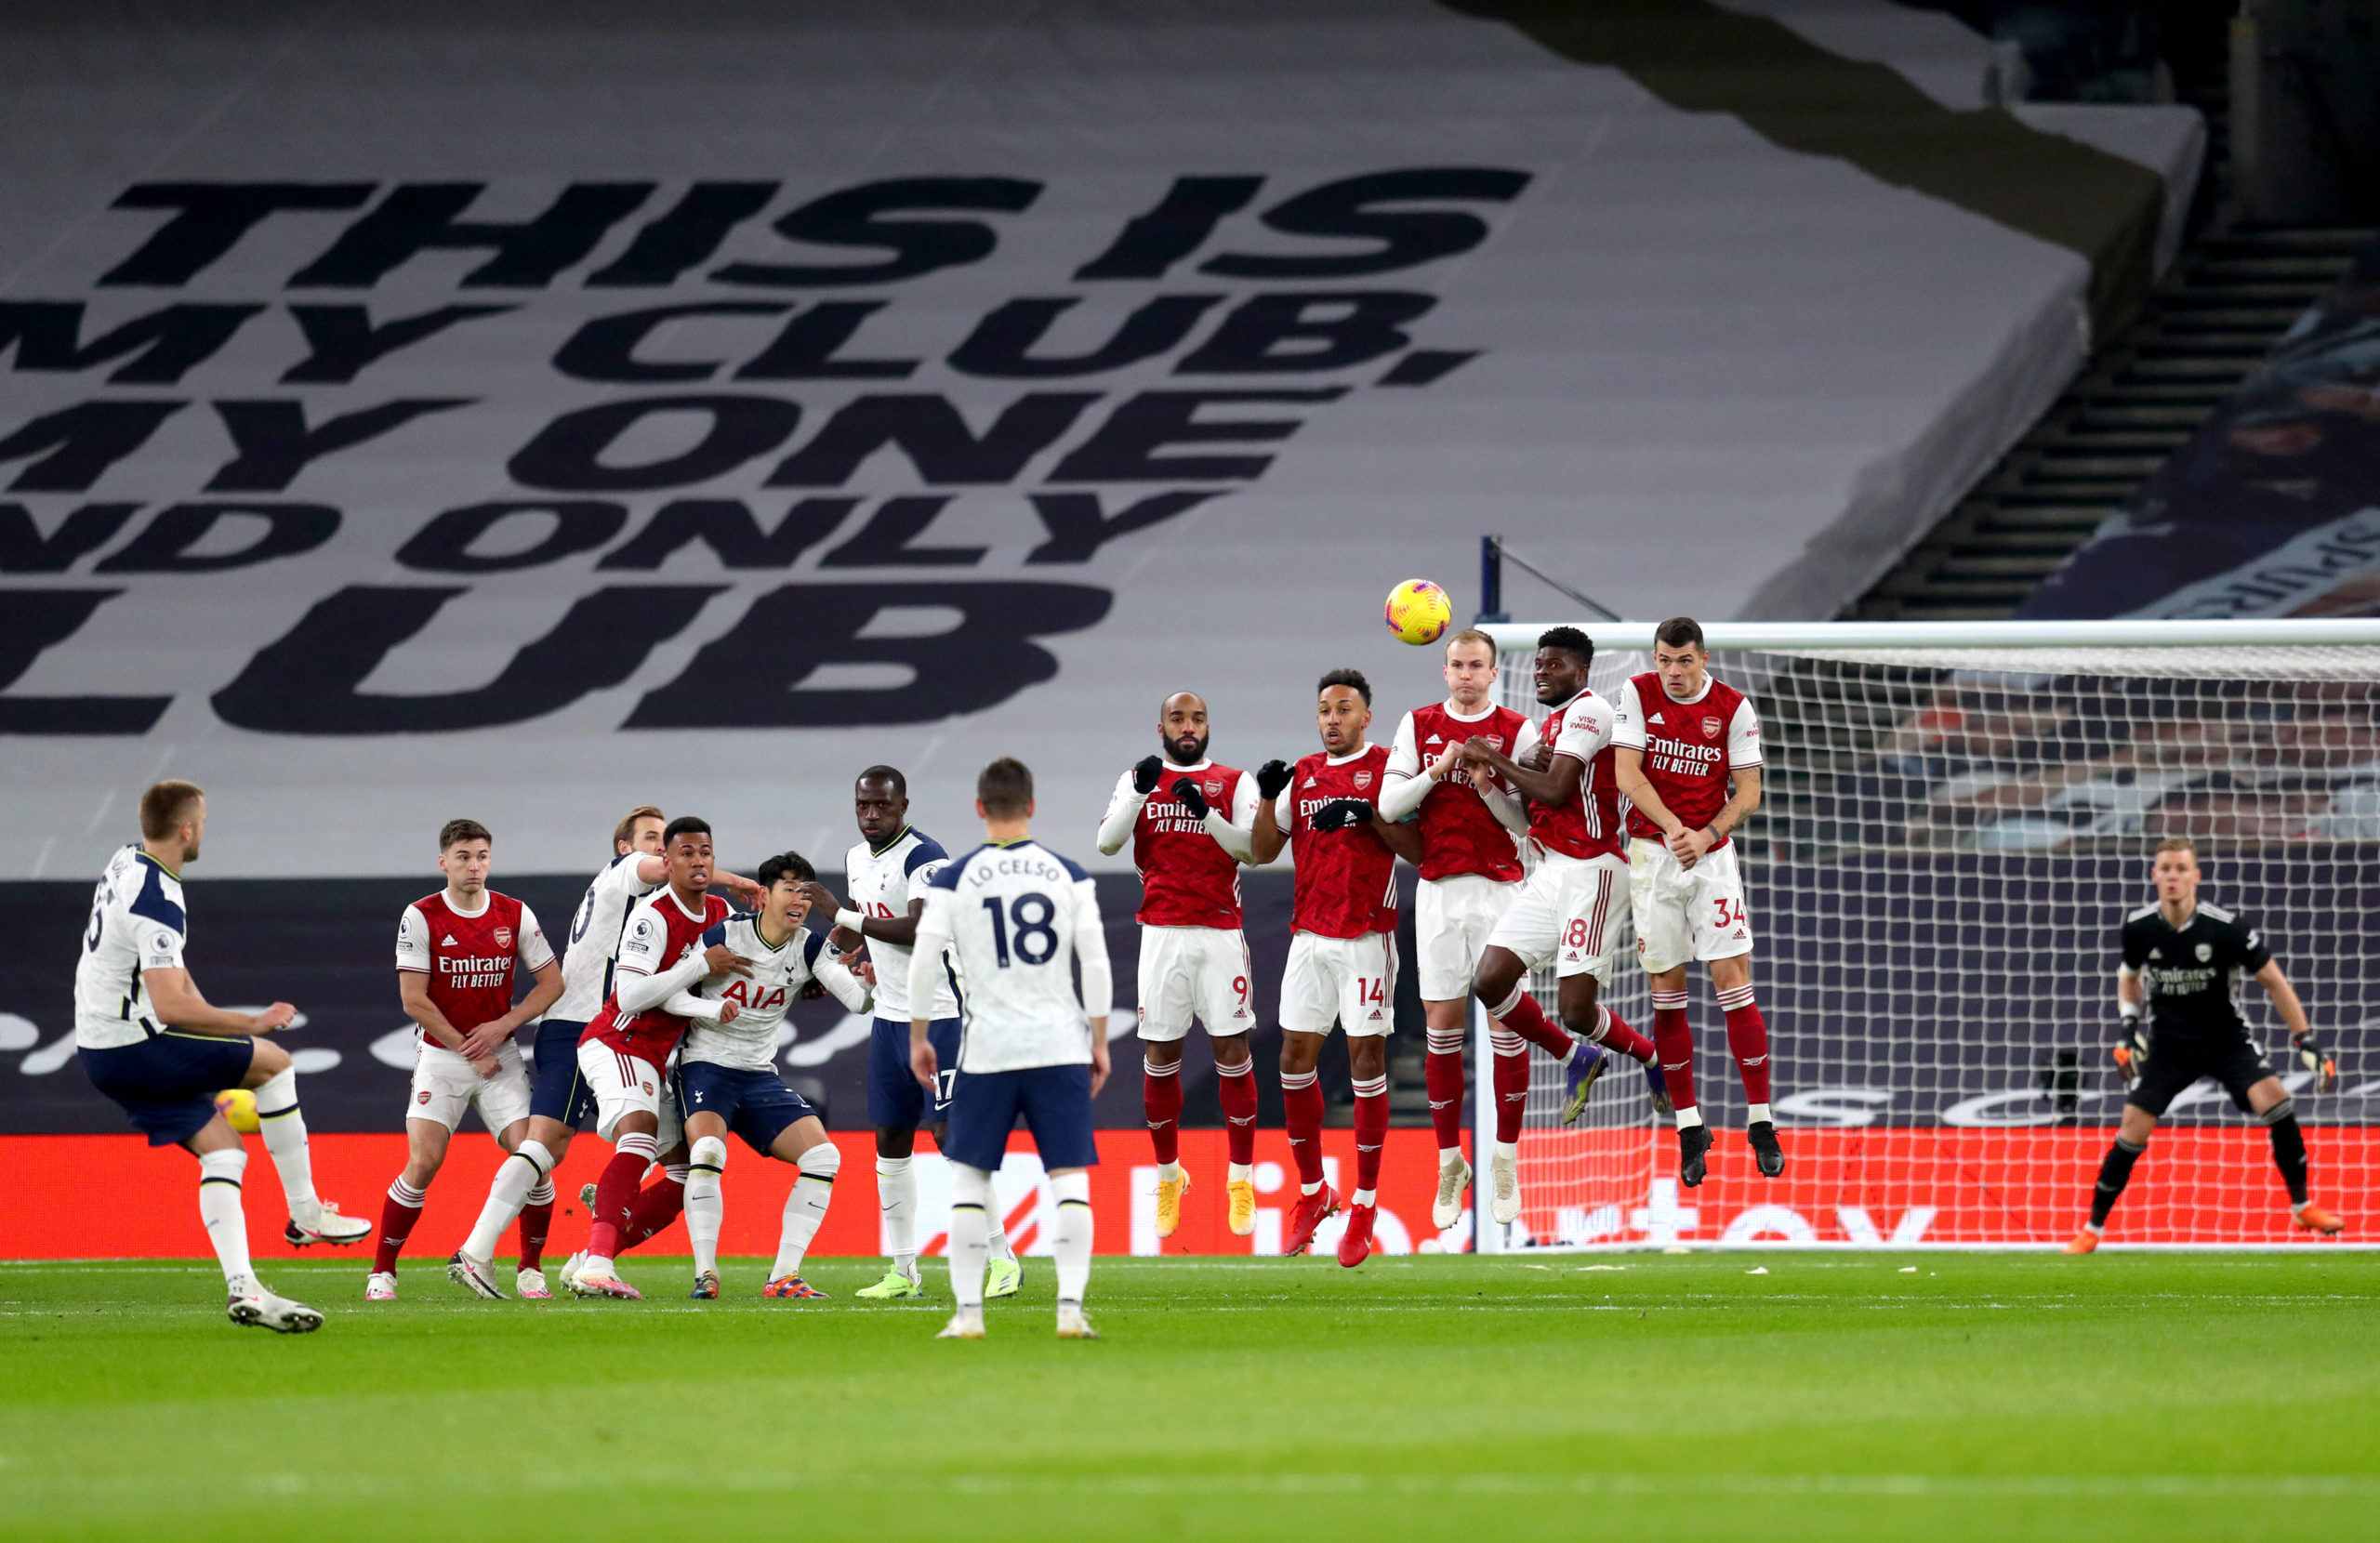 Arsenal Vs Tottenham F2uyh6ynkhcwwm A fantastic, entertaining match